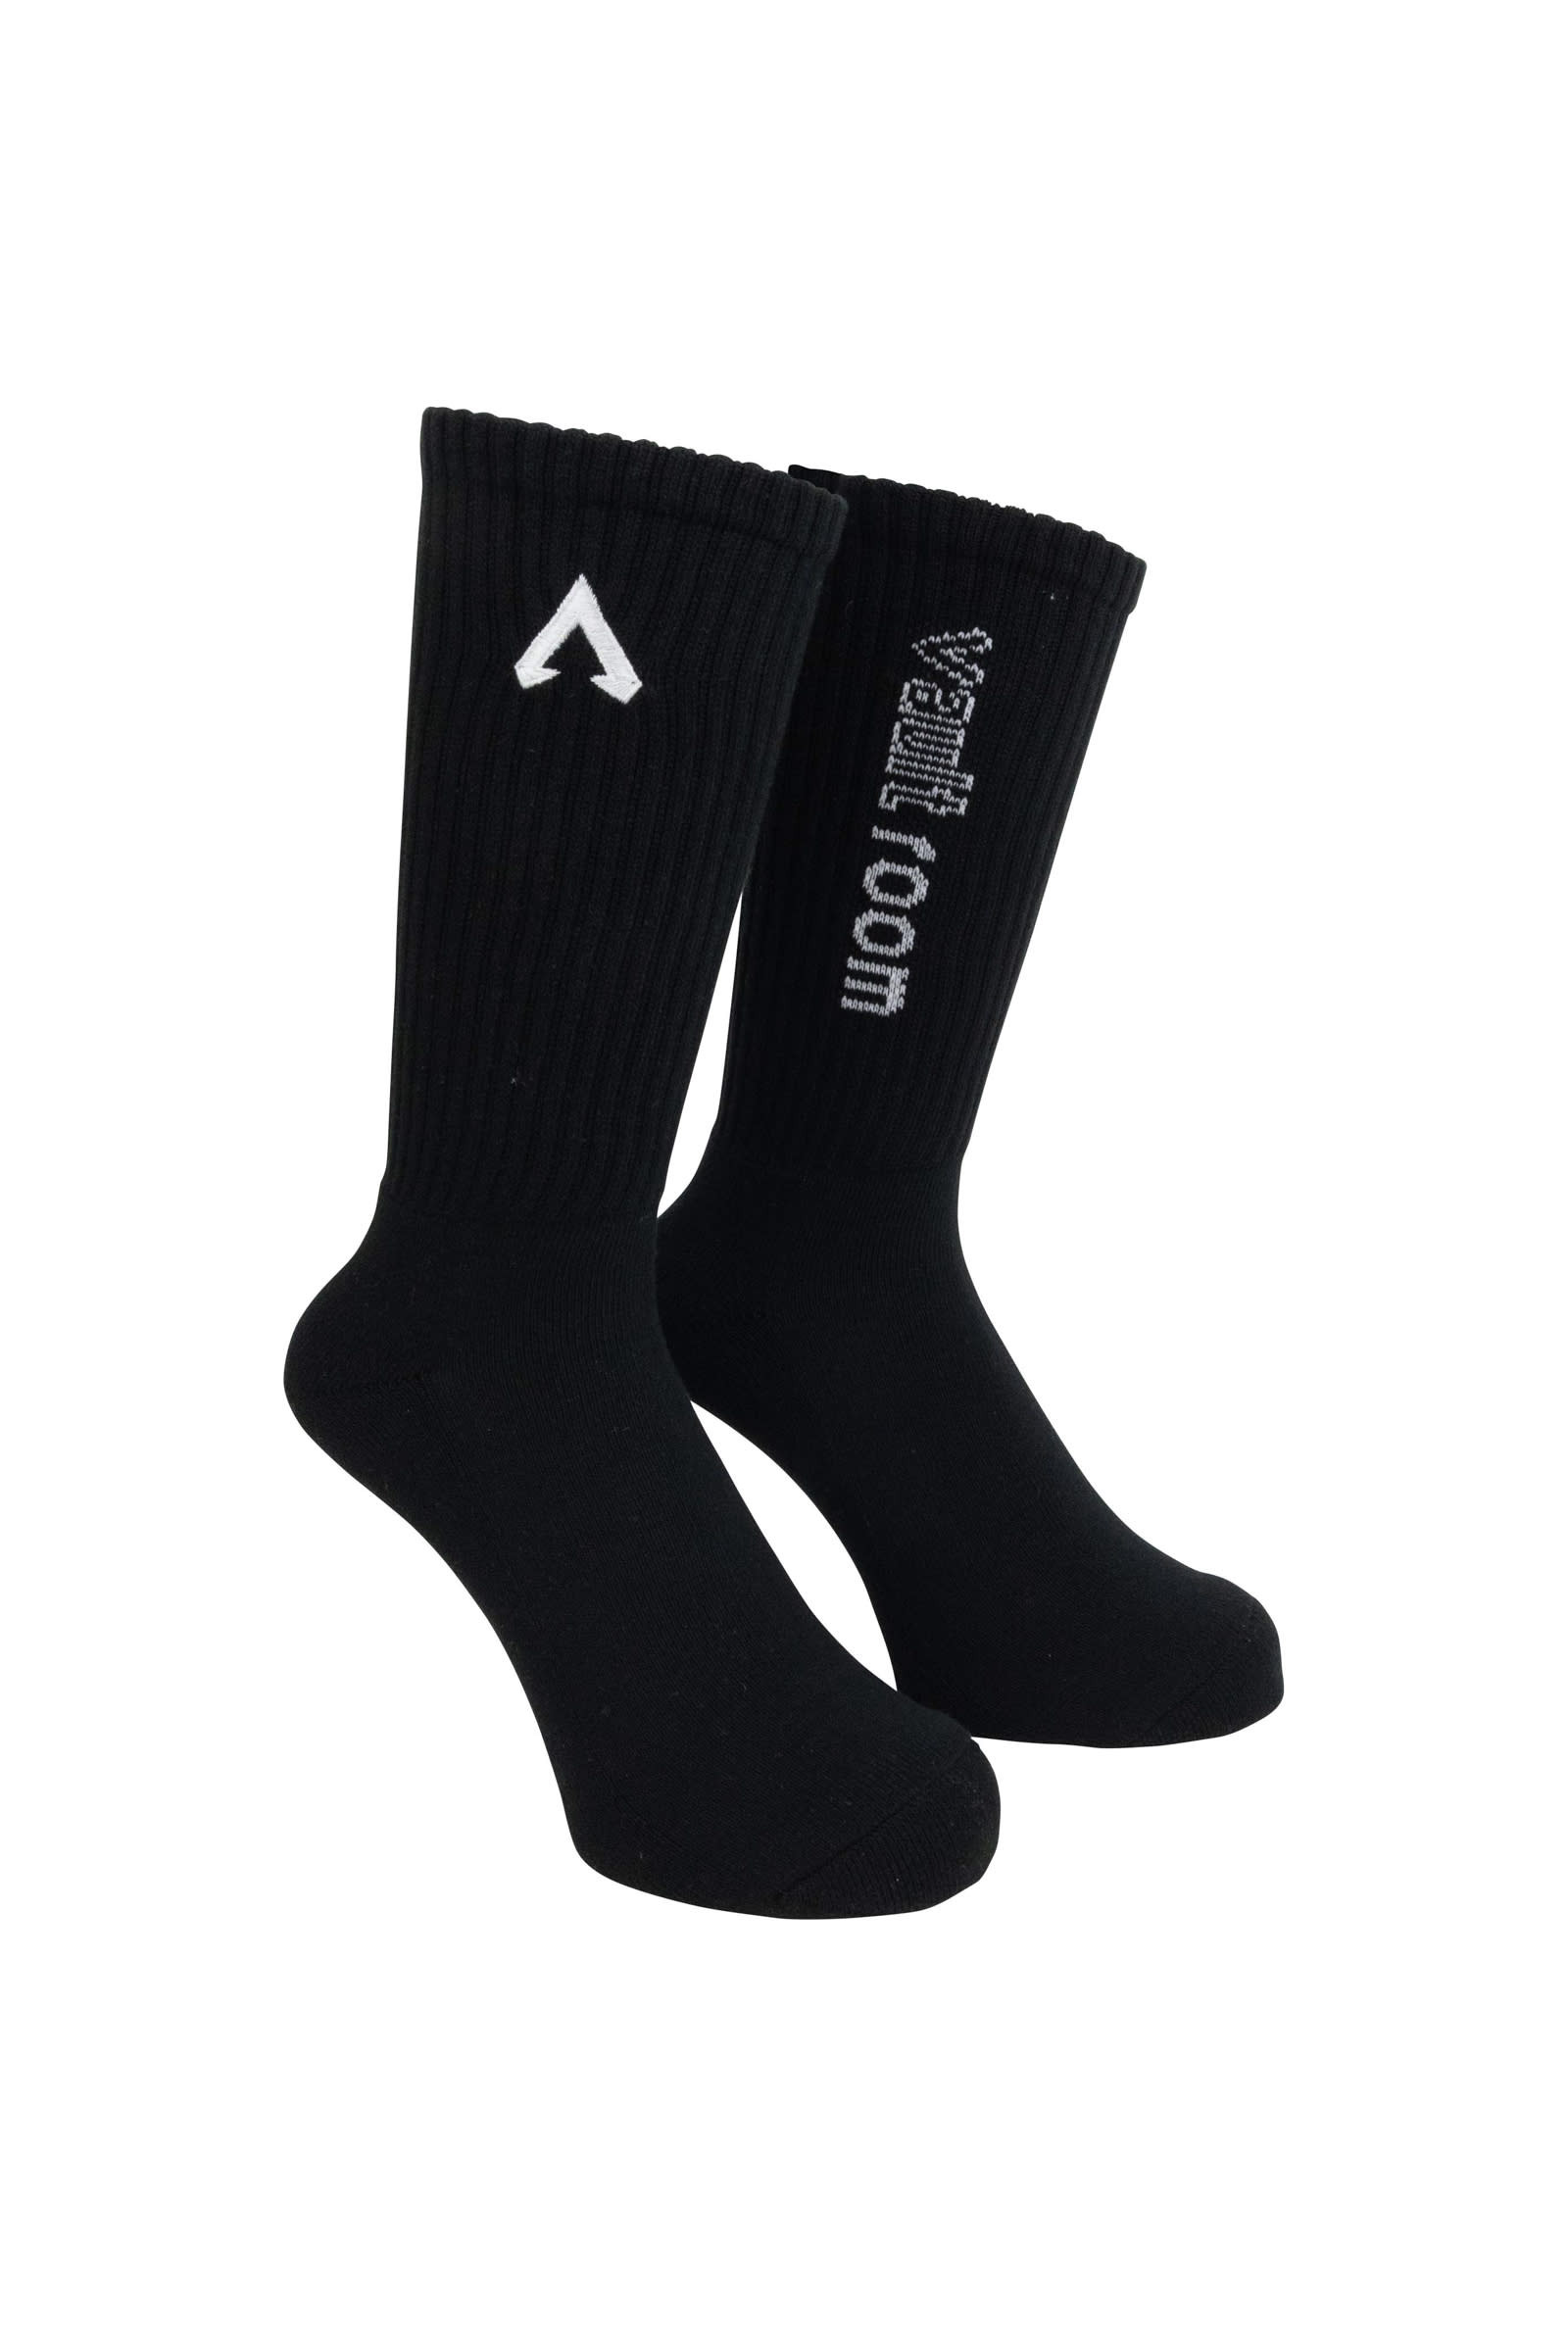 vaultroom x Apex Logo Socks Legends